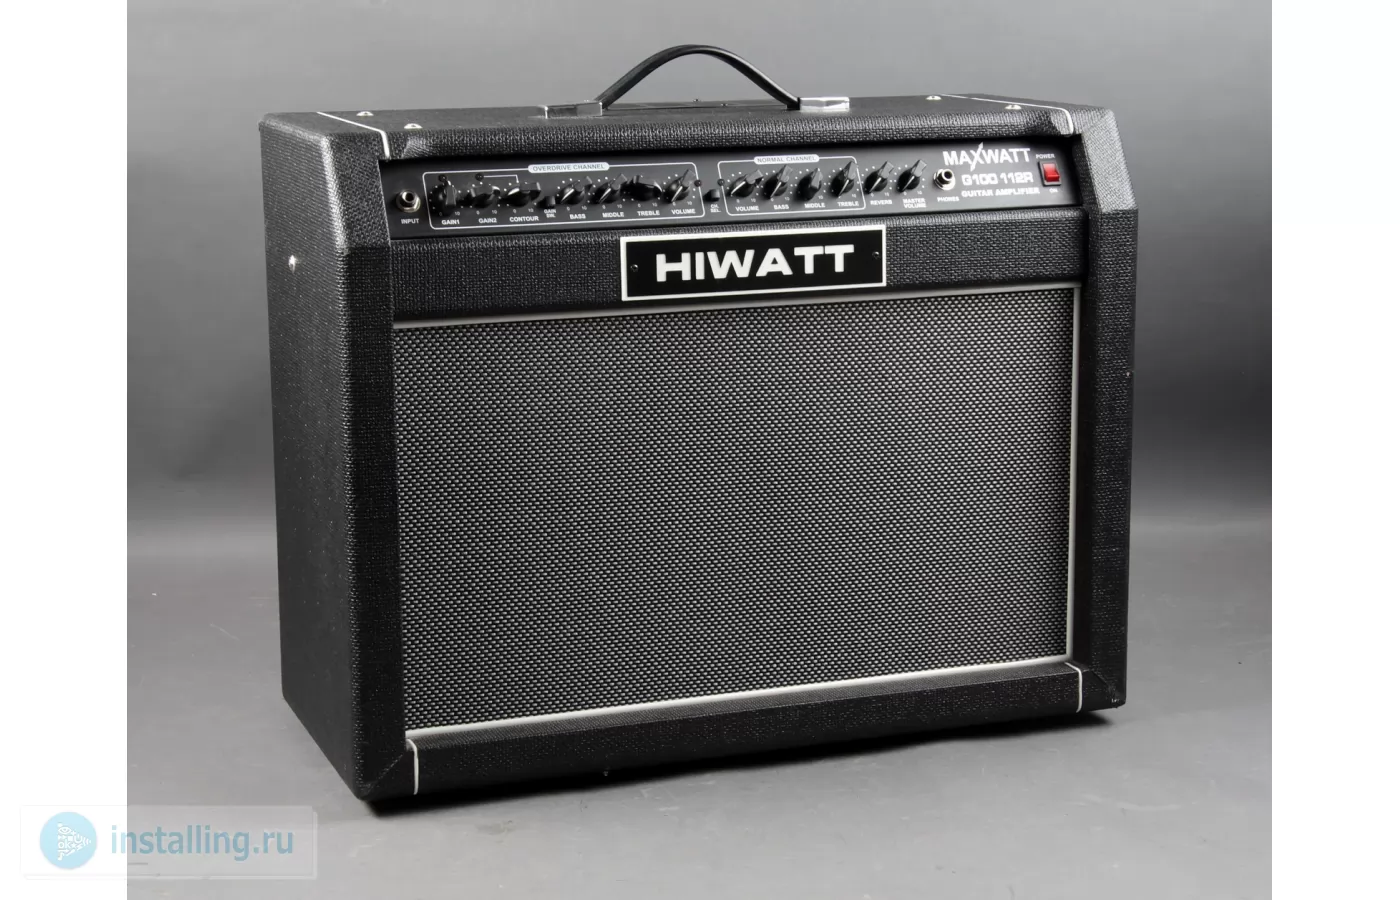 Комбо со. Hiwatt g100/1/12r. Custom Hiwatt 100. Hiwatt g50/12r. Orange ppc112 гитарный кабинет.